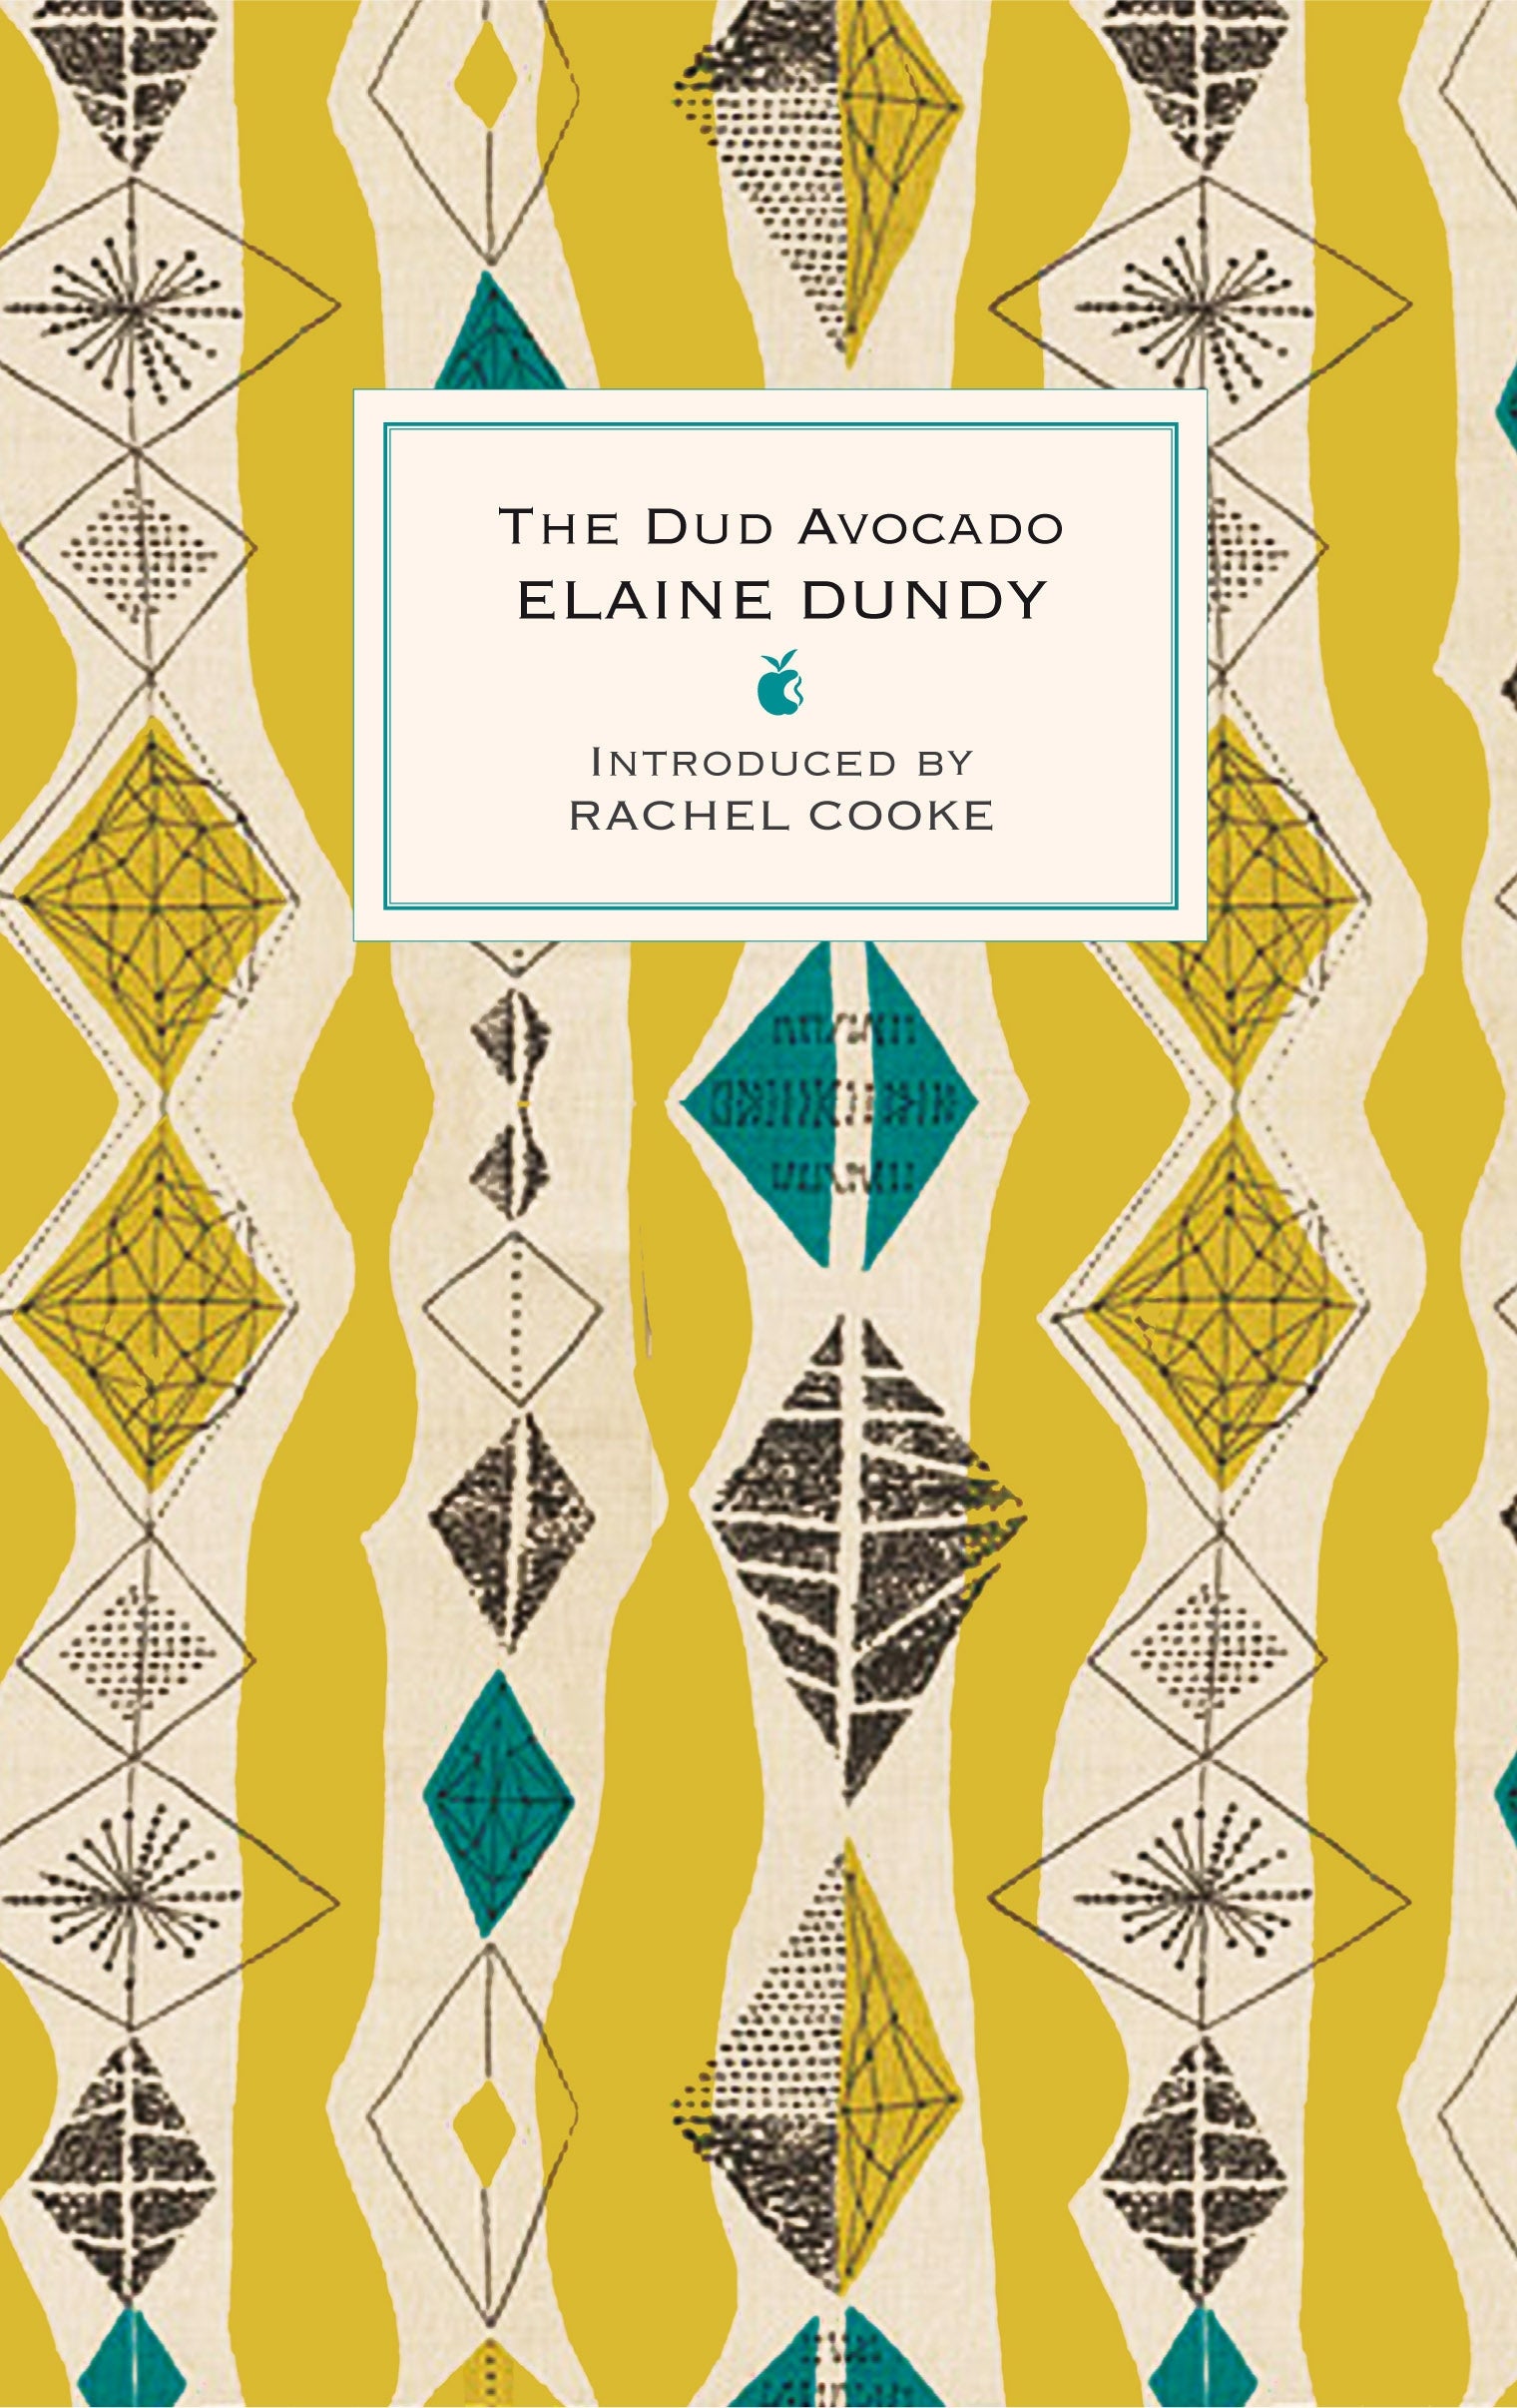 The Dud Avocado by Elaine Dundy